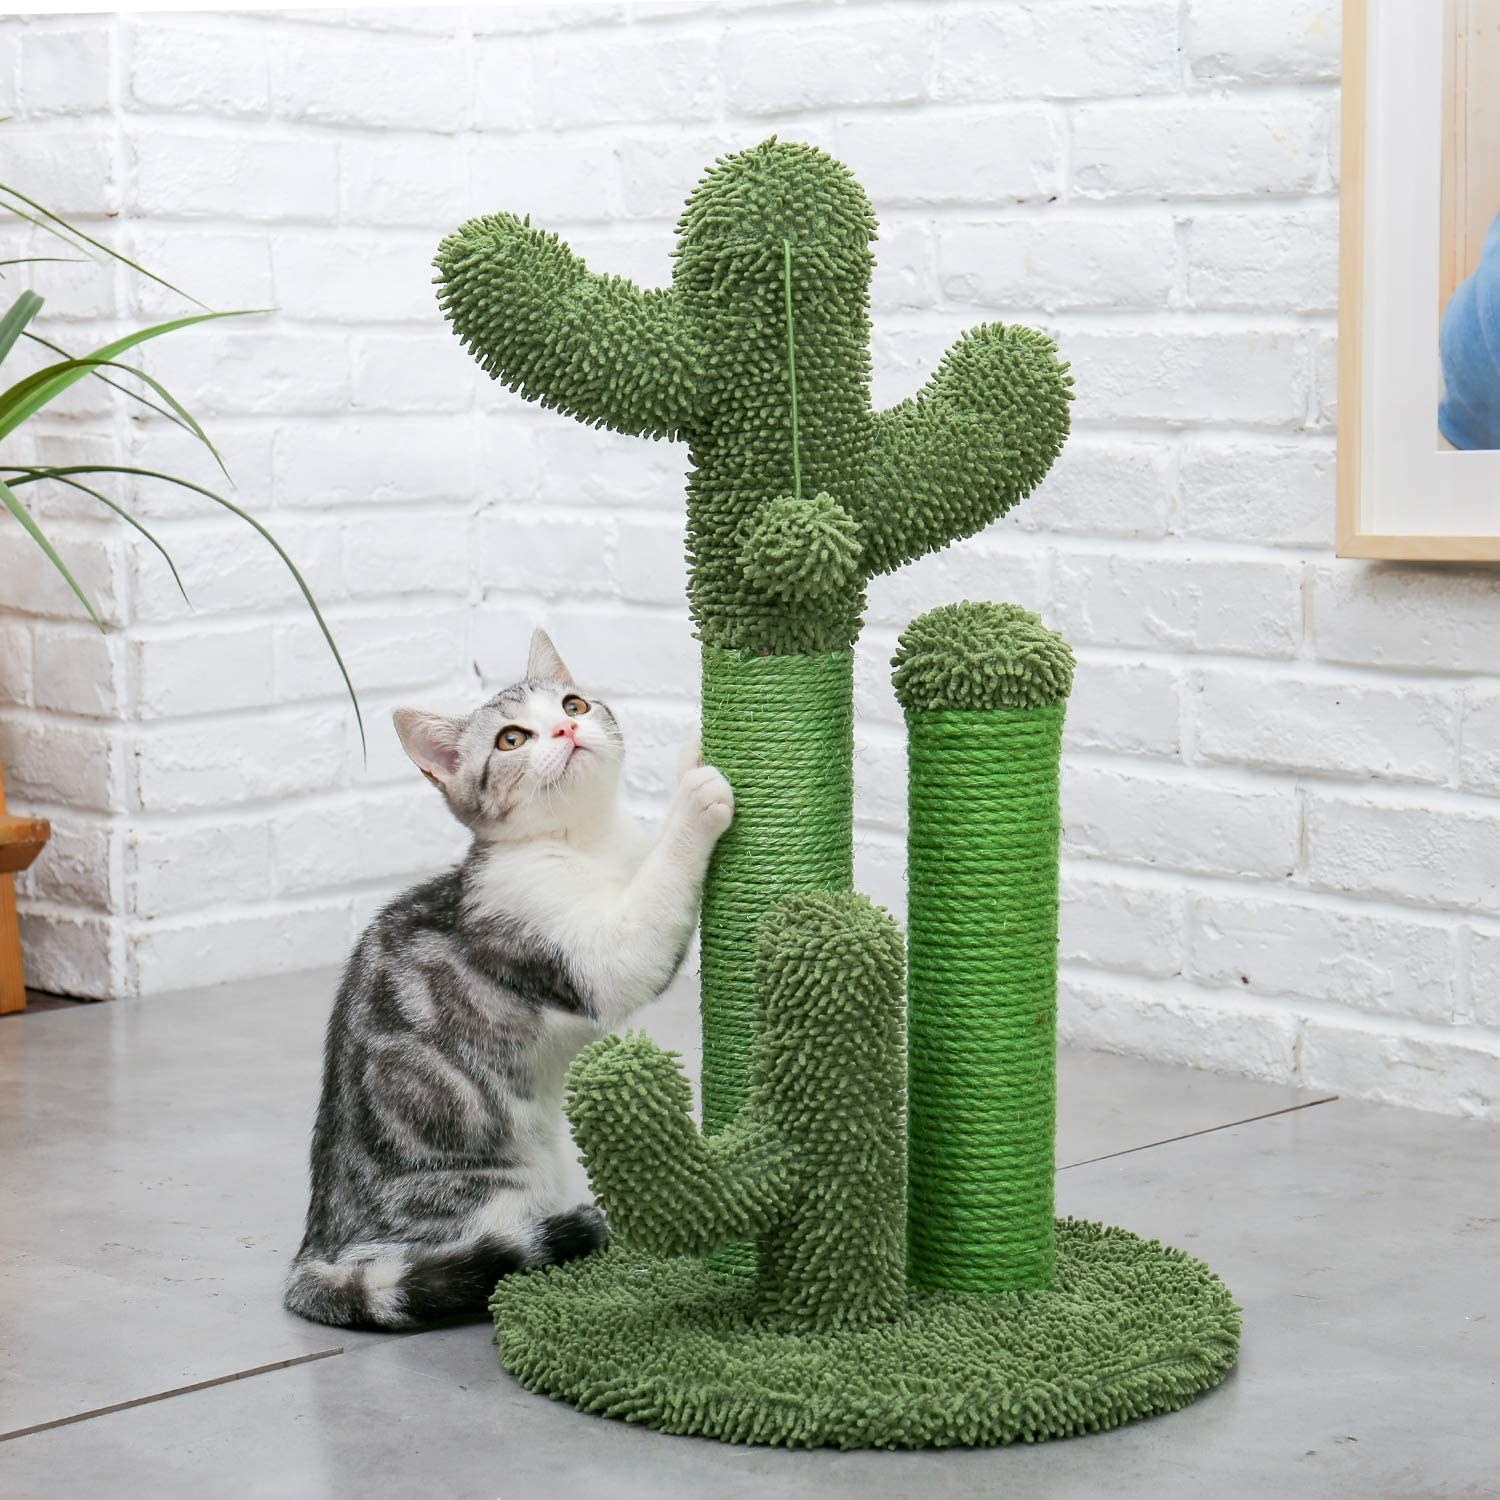 A cat scratcher that looks like a cactus